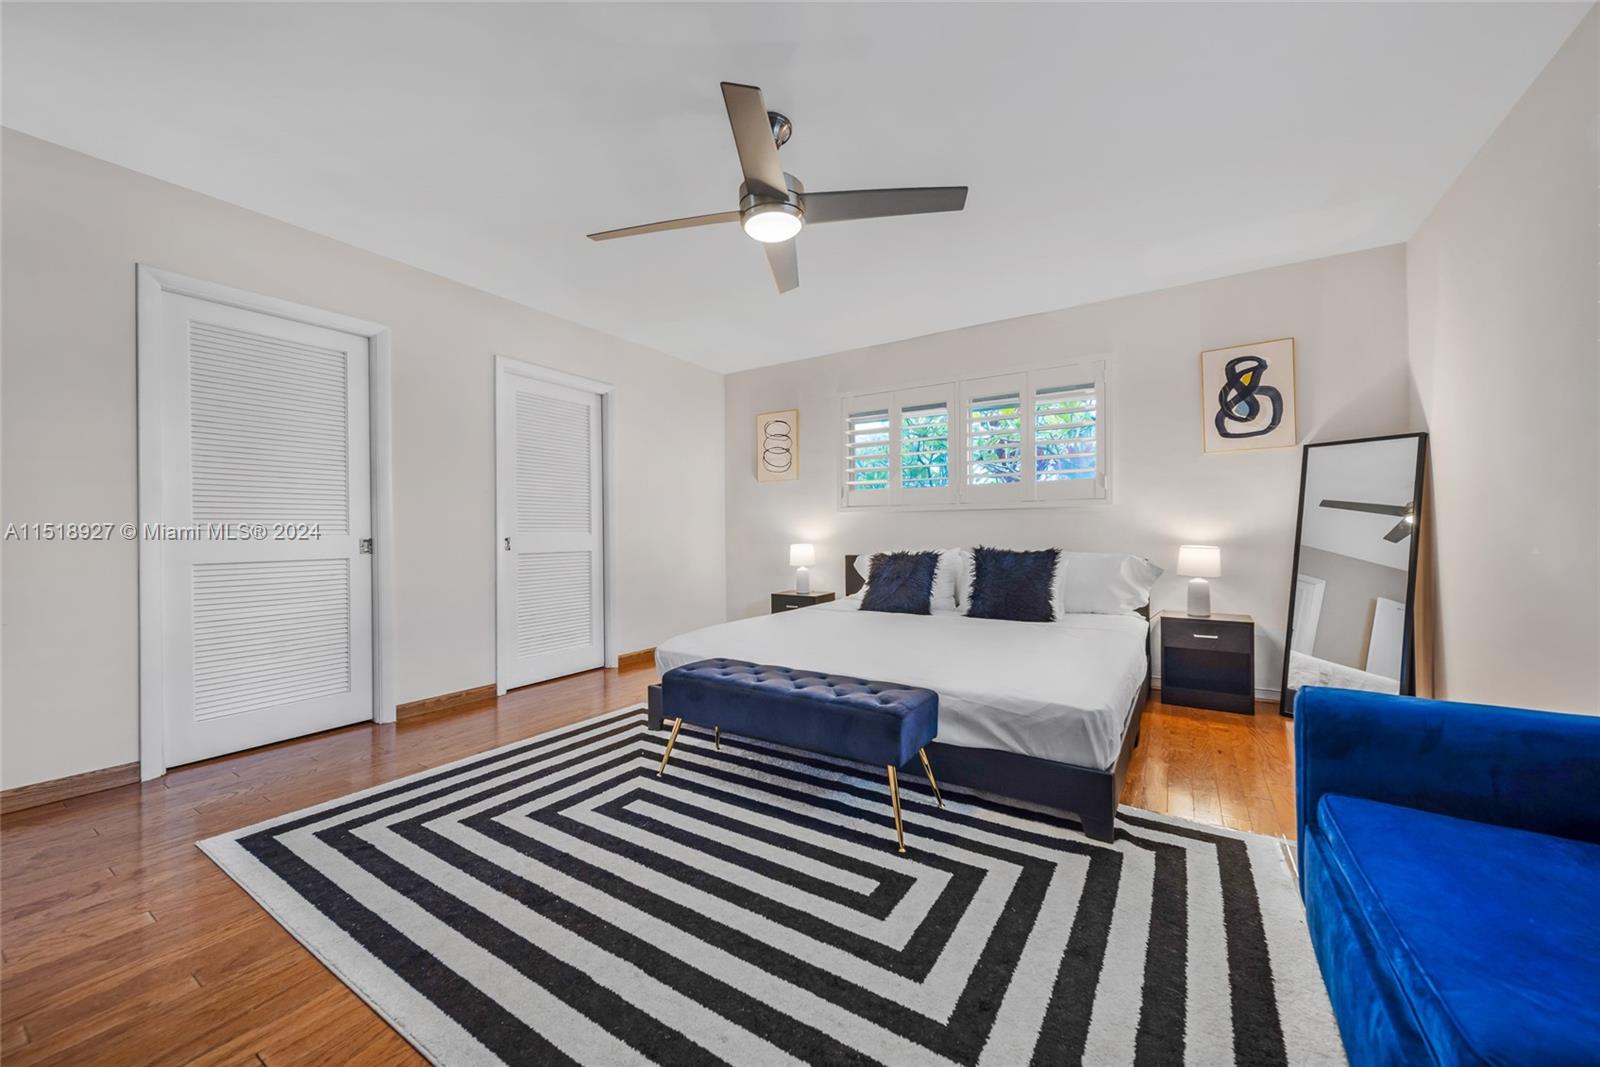 Rental Property at 5451 Taylor St St, Hollywood, Broward County, Florida - Bedrooms: 4 
Bathrooms: 2  - $6,700 MO.